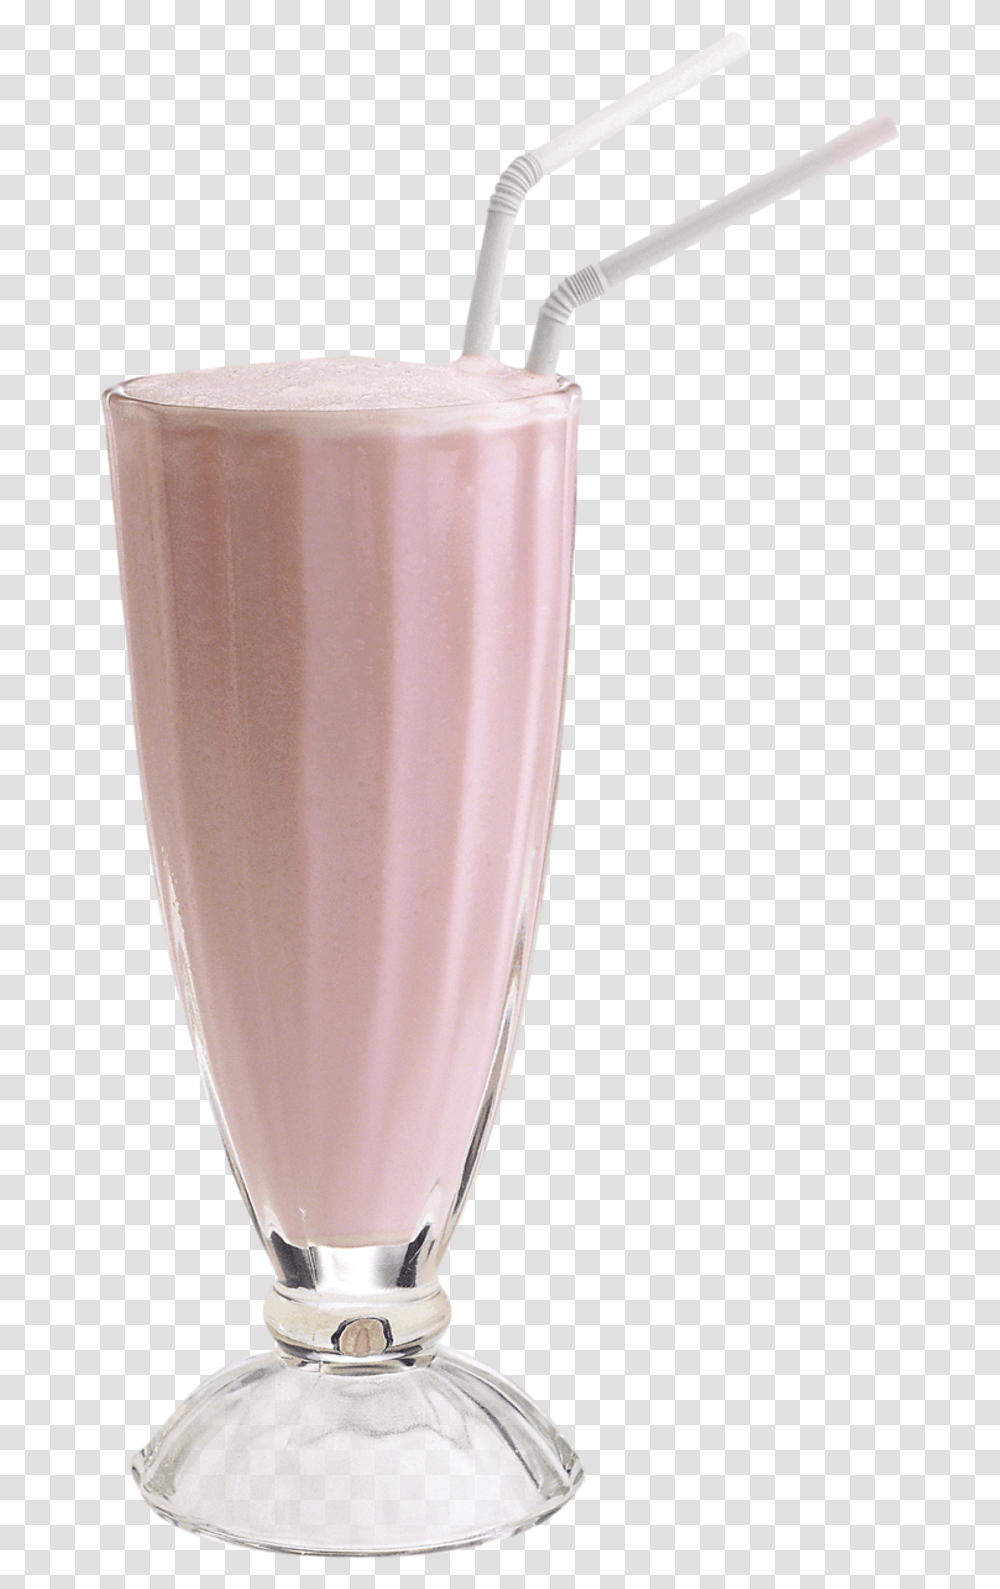 Milkshake Download Image Aesthetic, Juice, Beverage, Smoothie, Chair Transparent Png